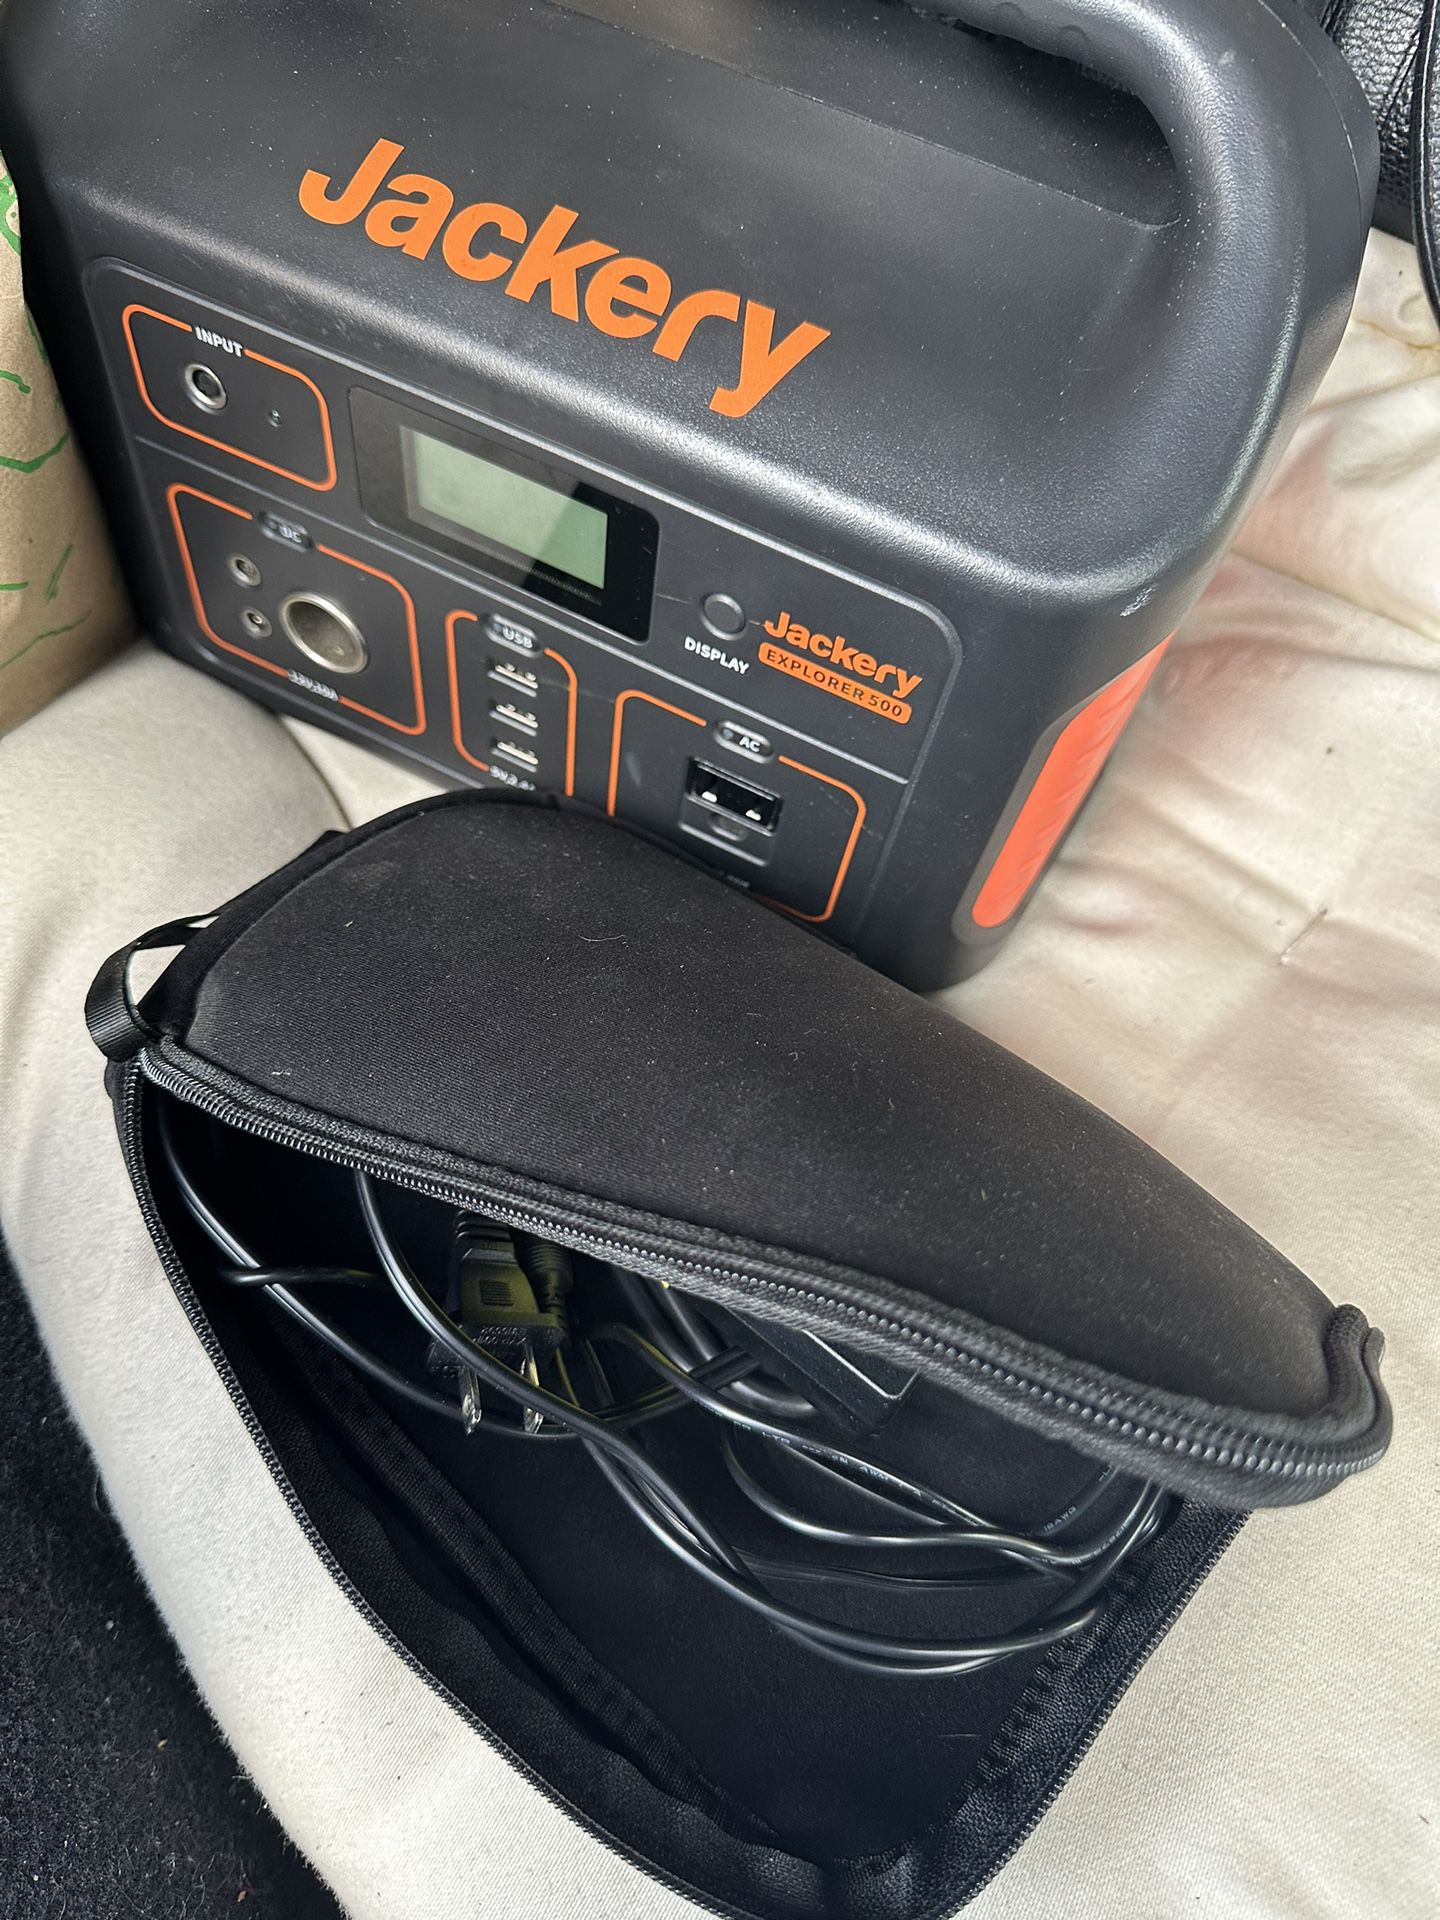 Jackery 500 Portable Battery